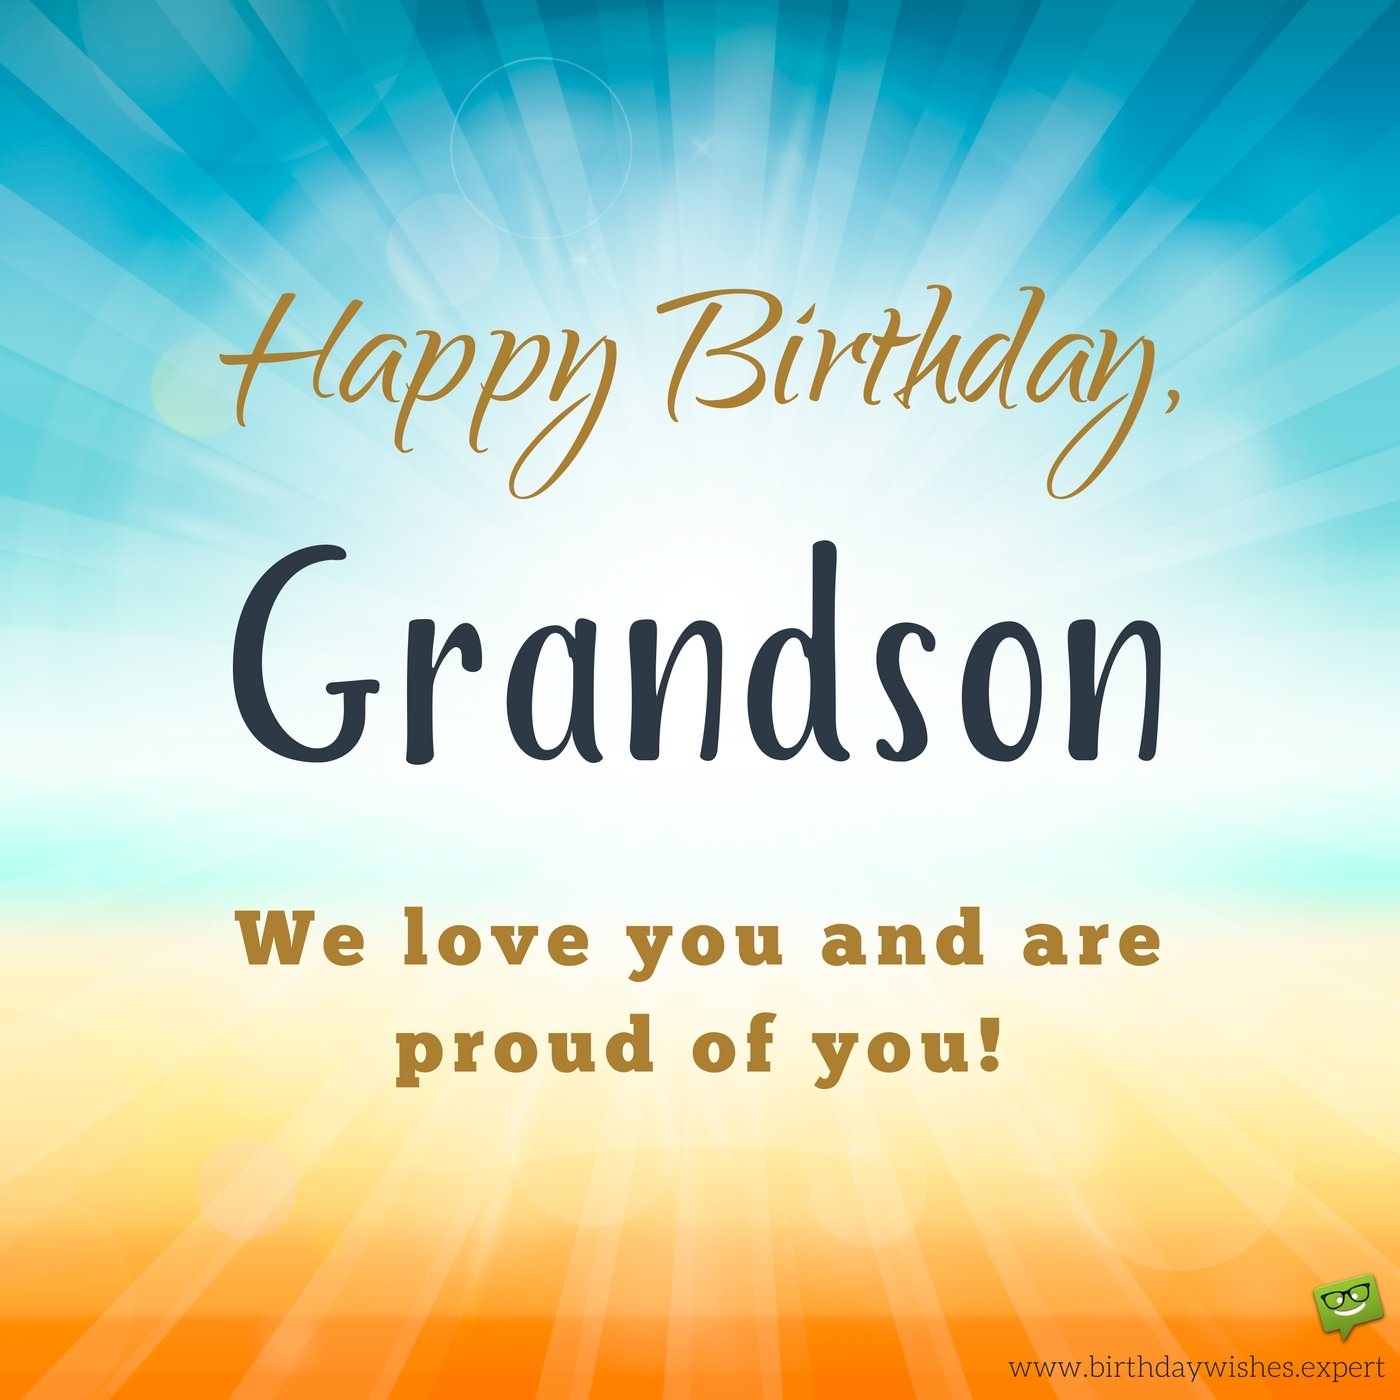 Happy Birthday, Grandson! | Your Hi-Tech Grandma & Grandpa